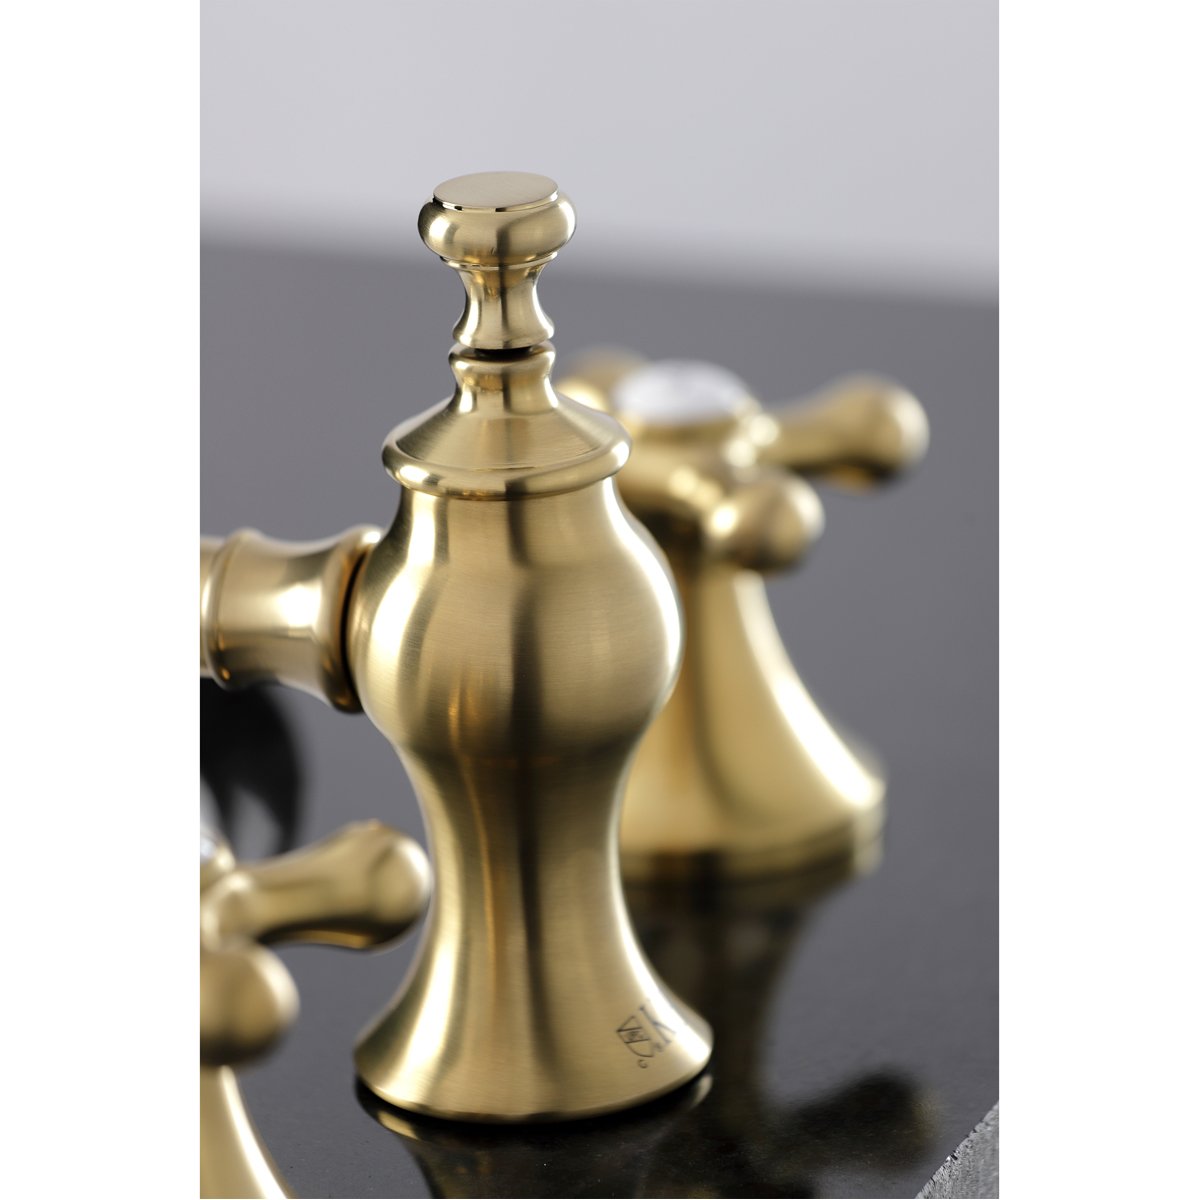 Kingston Brass Vintage Three-Hole 8-Inch Widespread Bathroom Faucet-DirectSinks